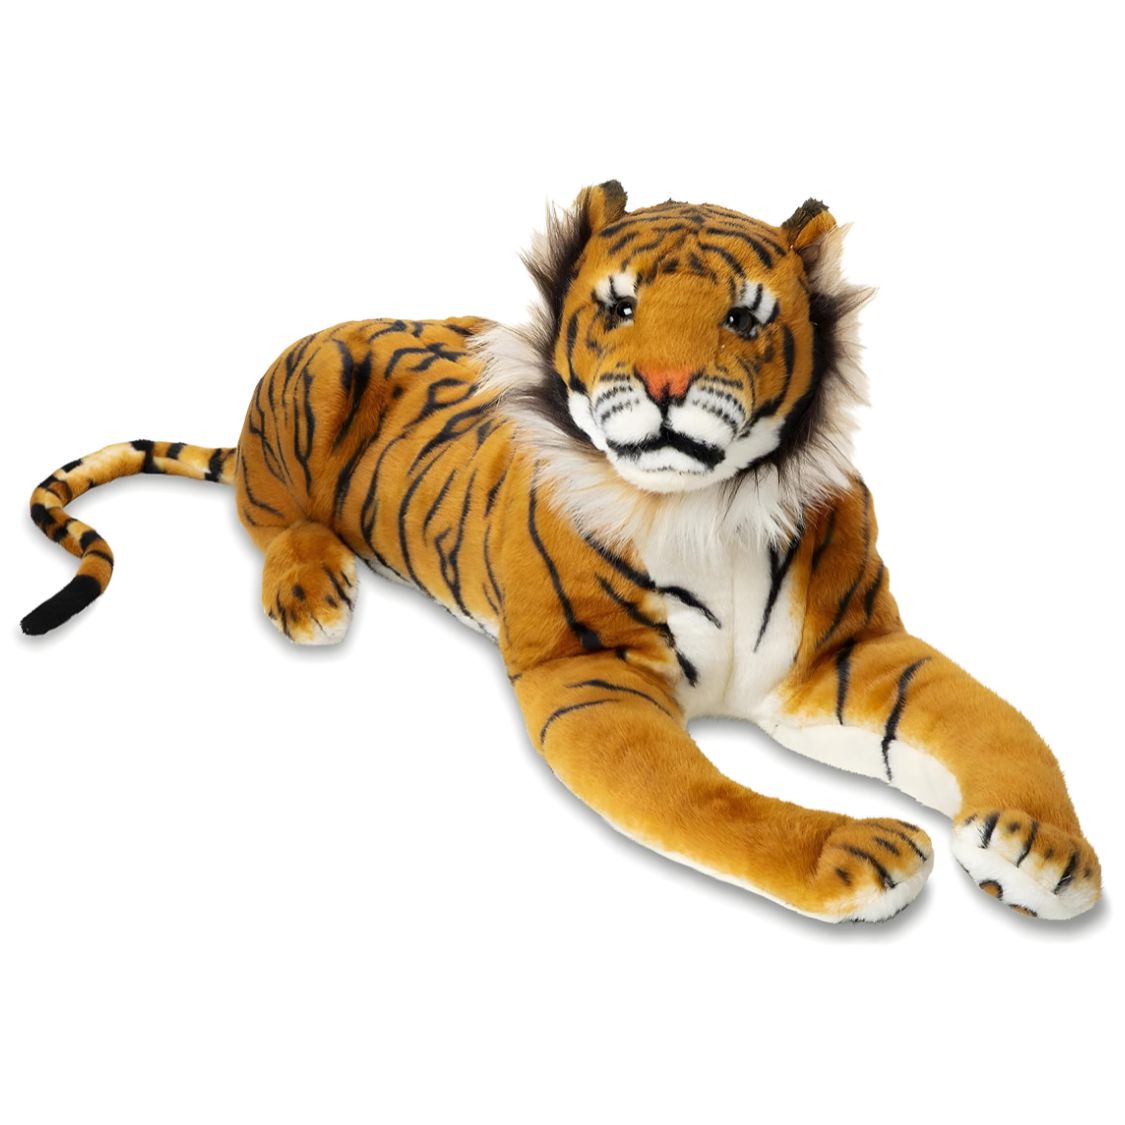 Tiger Stuffed Animal Rental